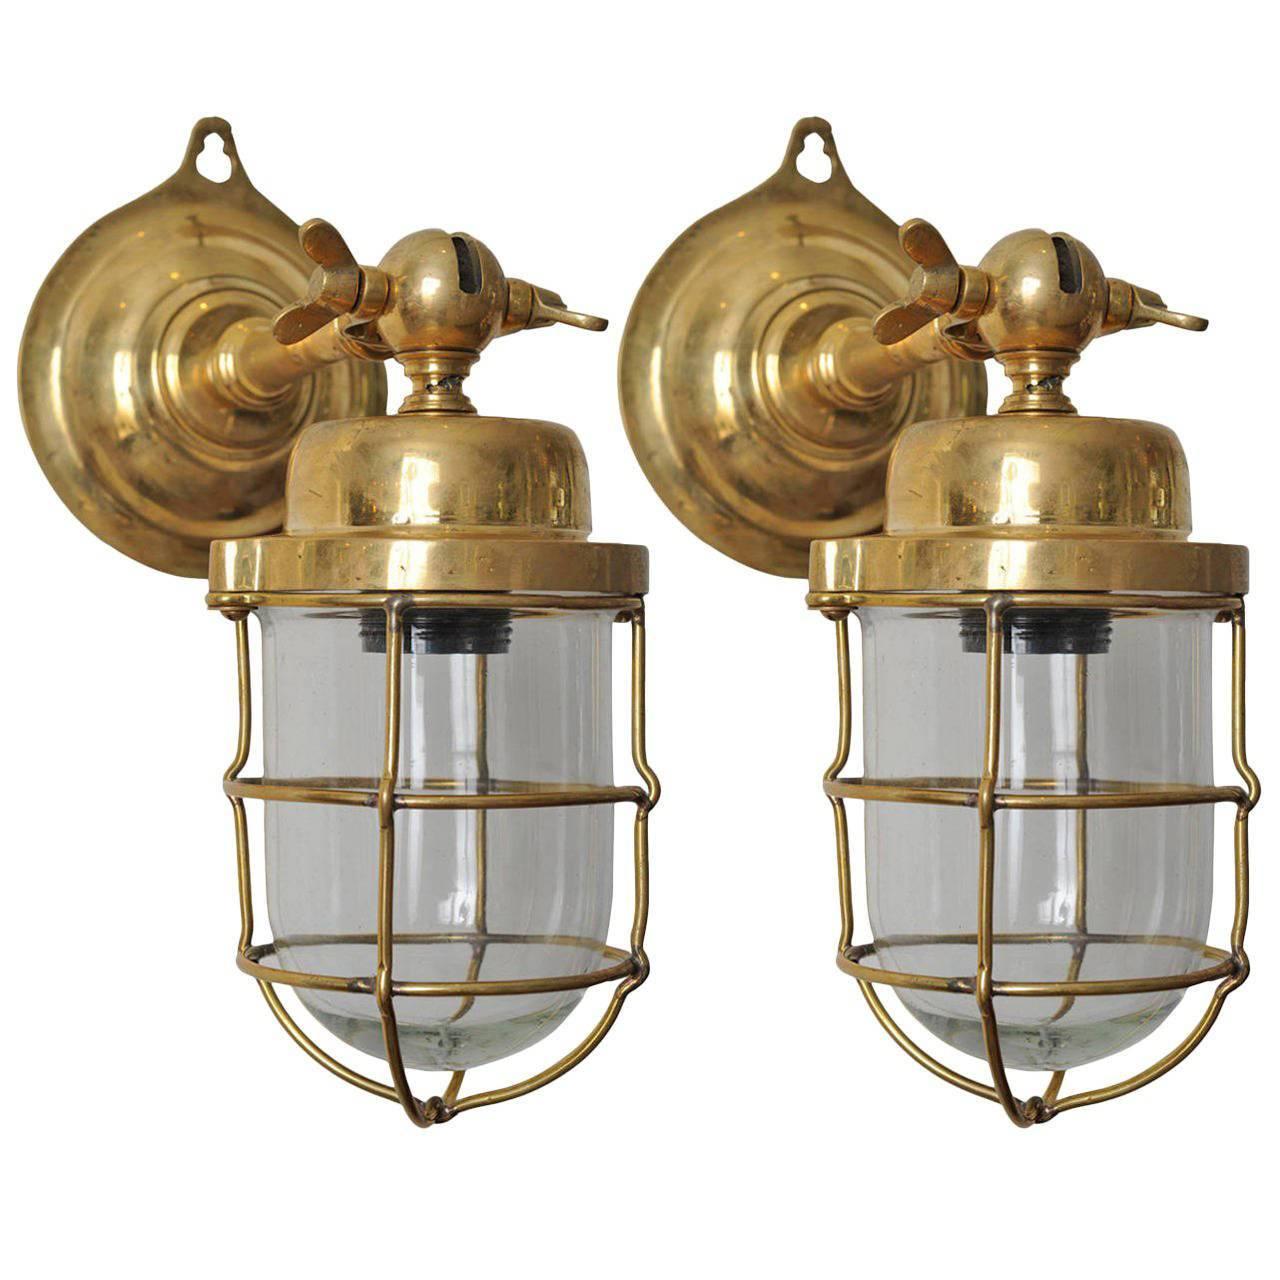 Pair of Ship's Nautical Brass Passageway Wall Lights or Pendants